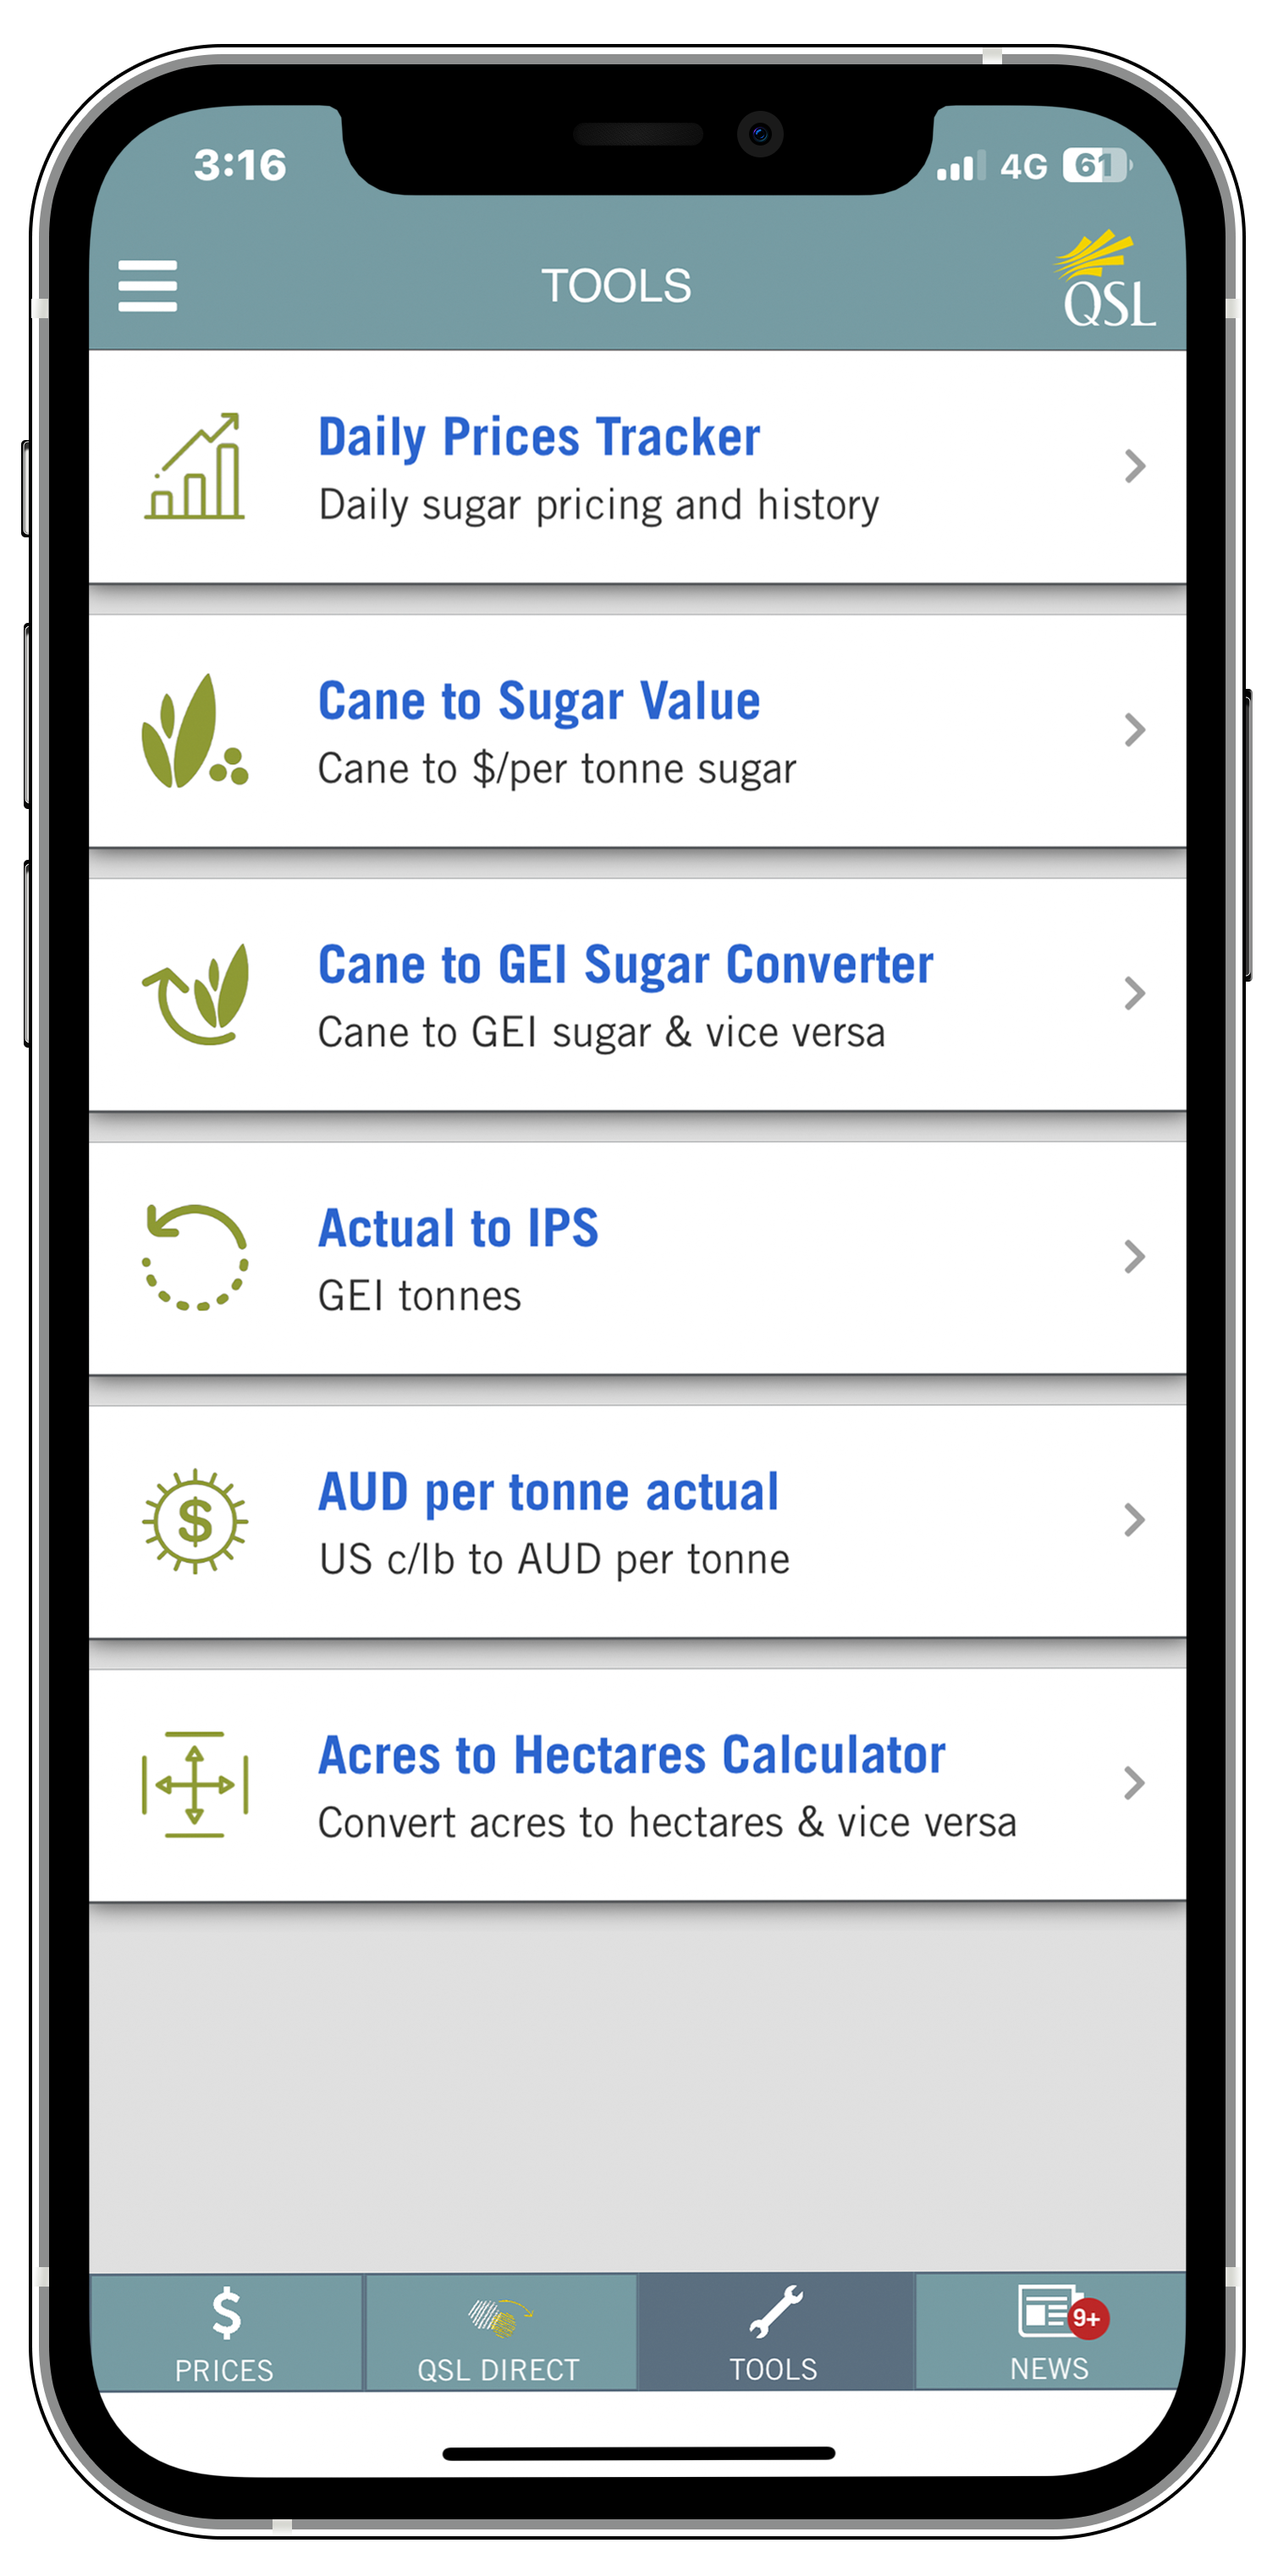 Tools Screenshot Mockup for QSL Mobile App